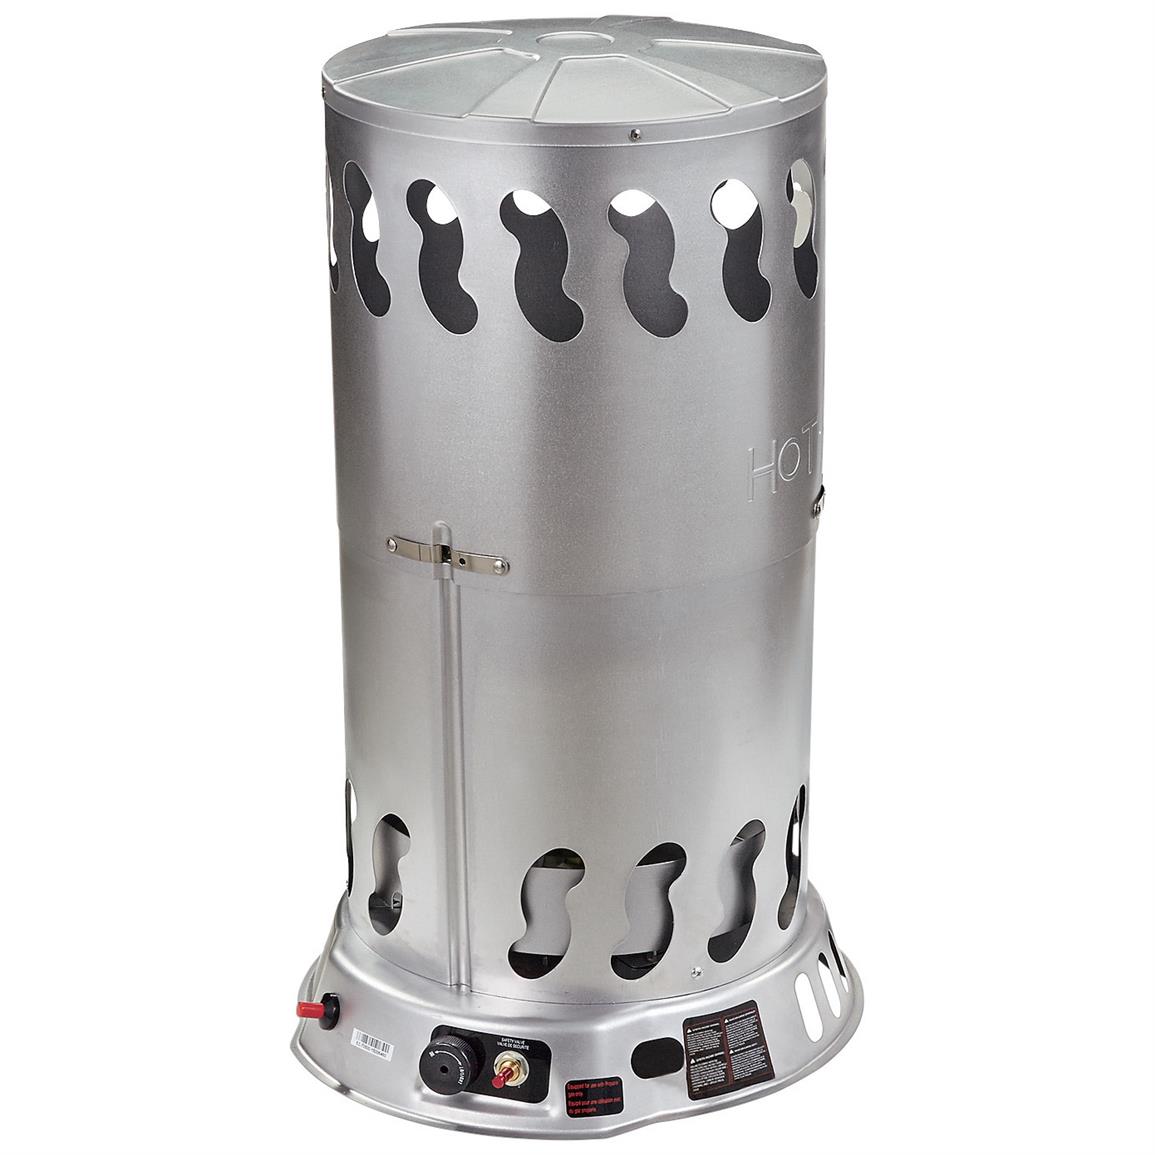 Mr. Heater Portable Propane Convection Heater, 200,000 BTU